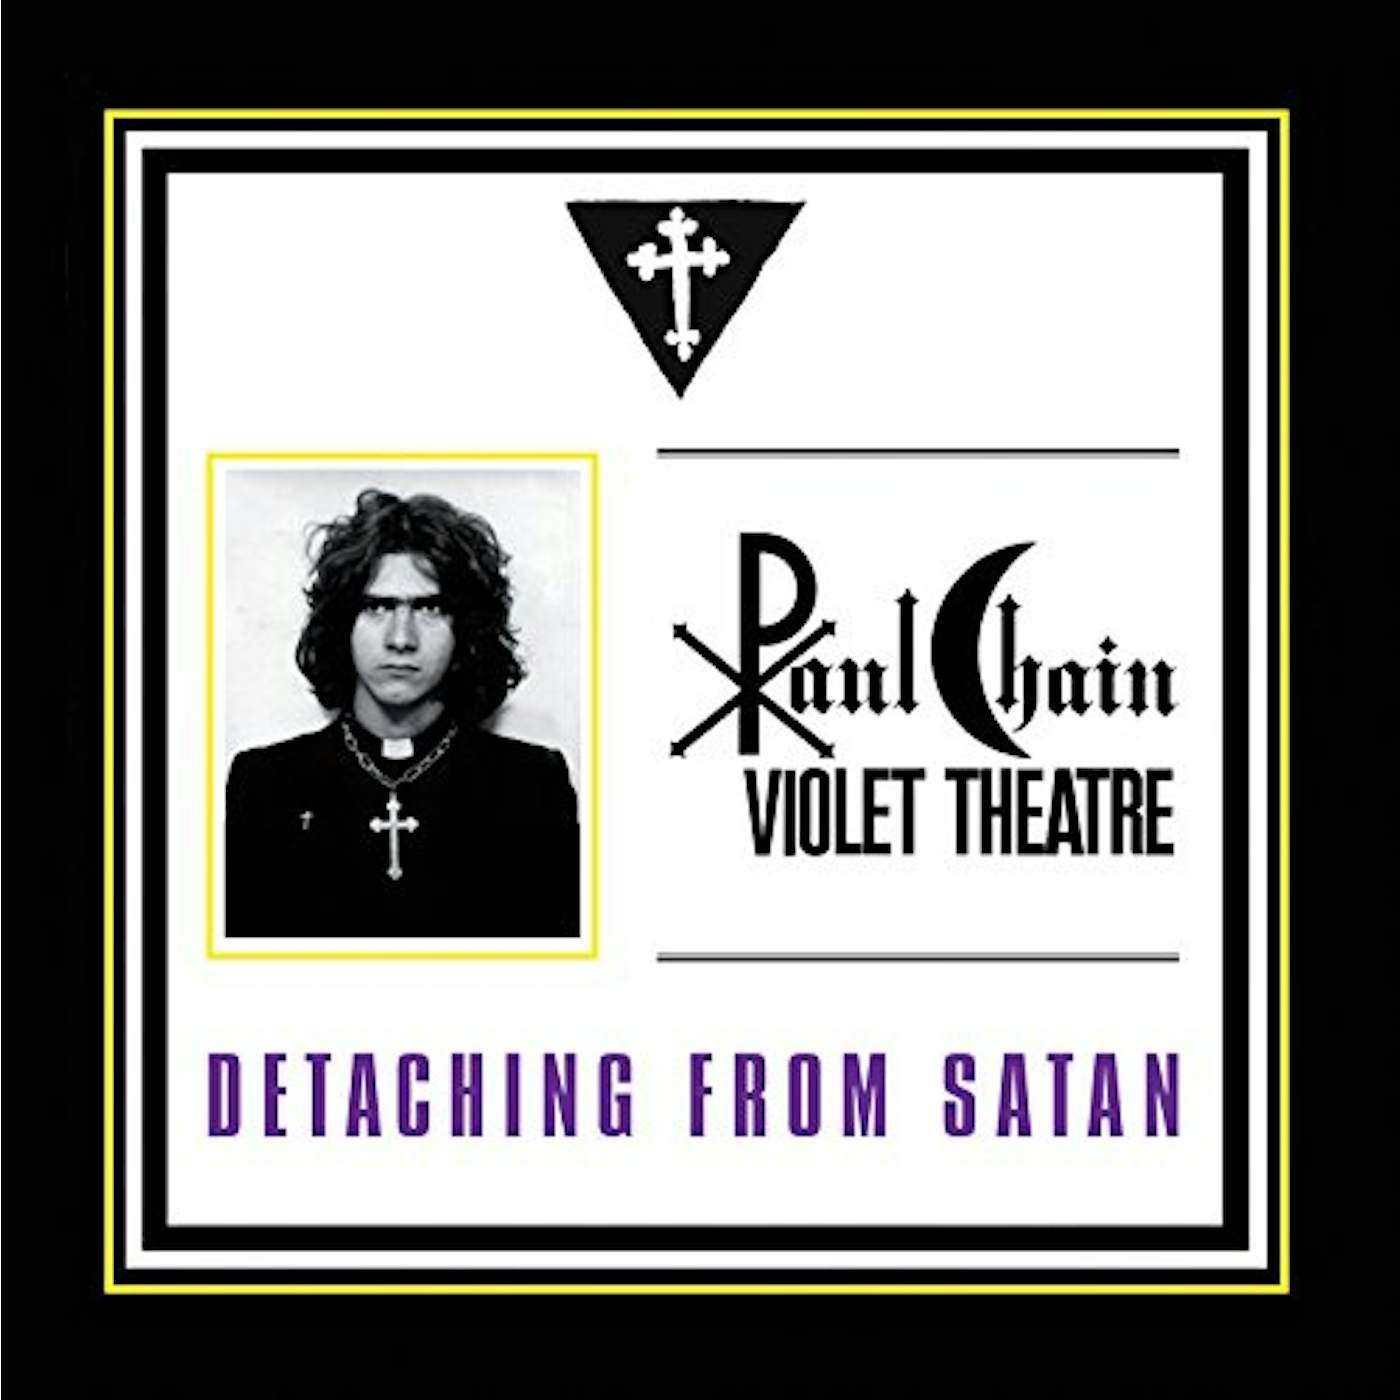 Paul Chain Violet Theatre DETACHING FROM SATAN CD